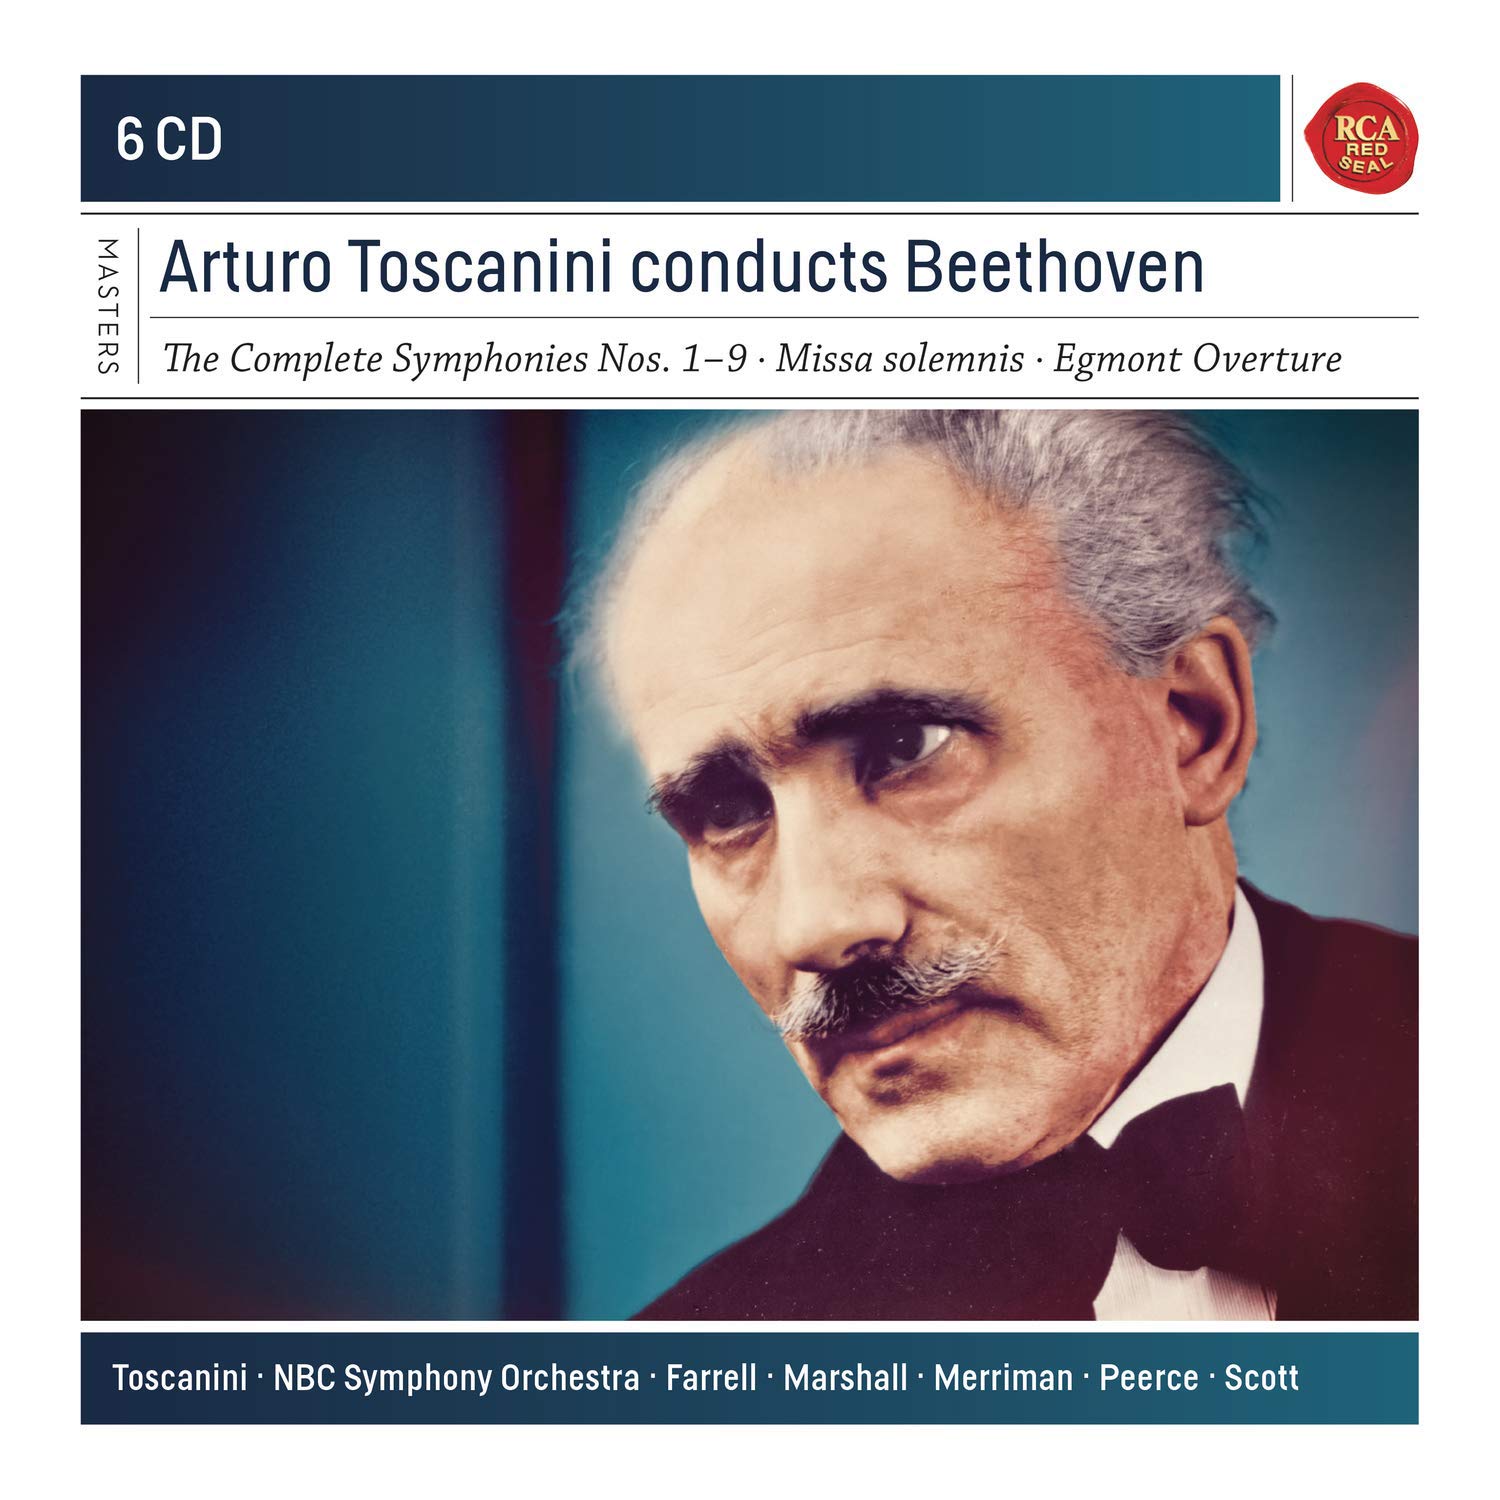 Arturo Toscanini conducts Beethoven | Arturo Toscanini, Ludwig Van Beethoven image0